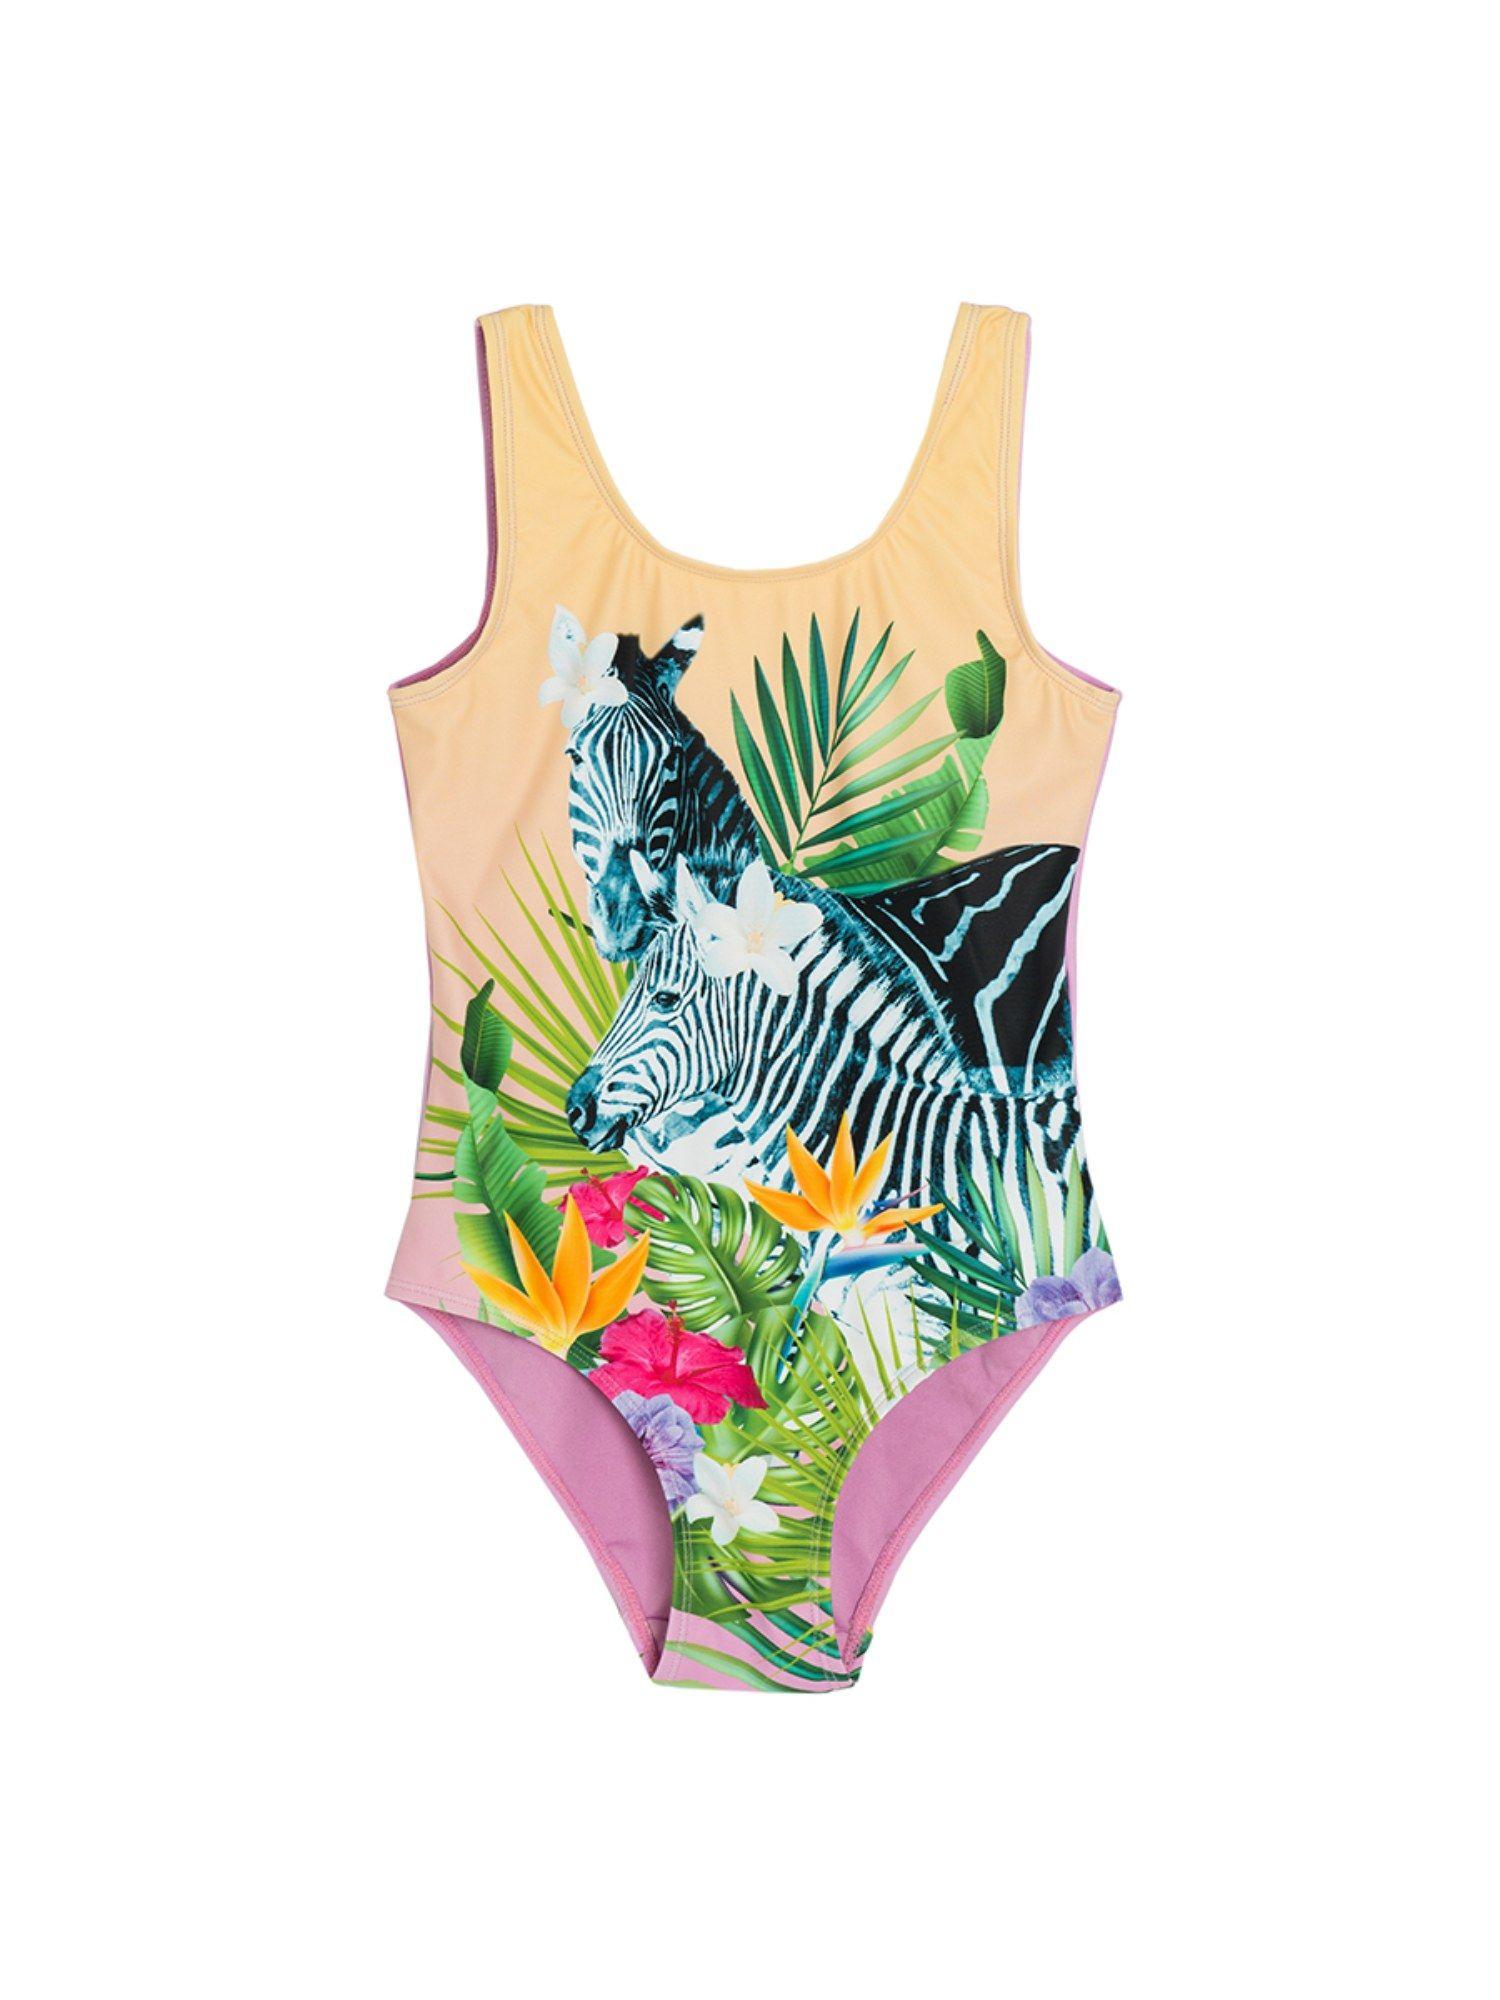 Smyk Girls Multi-color Printed Swimwear Suit